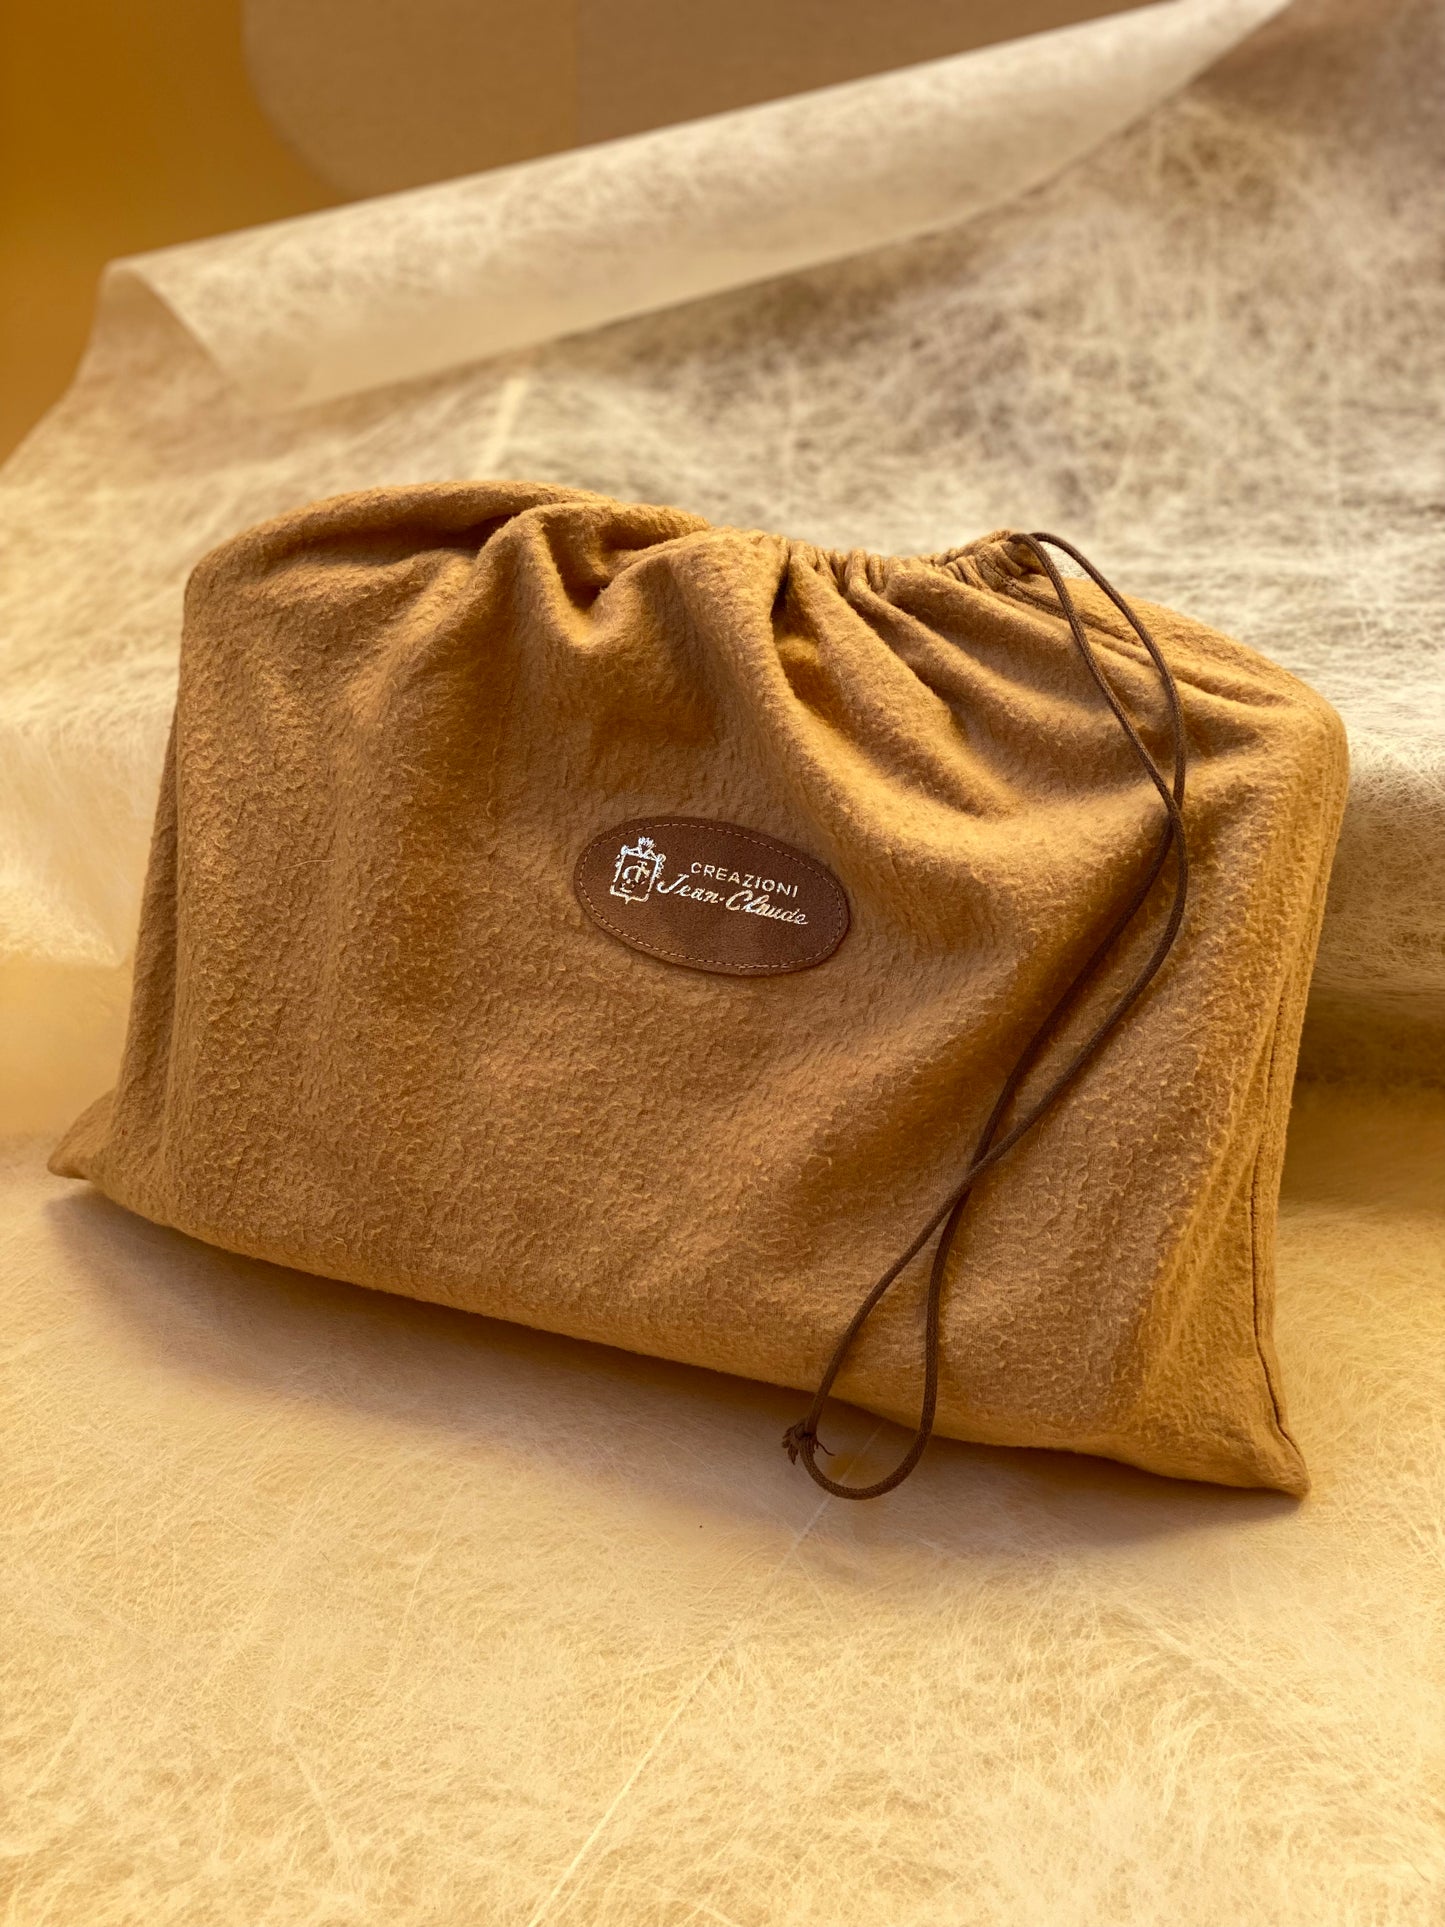 Vintage Caramel Brown Leather Handbag by Franzi 1864